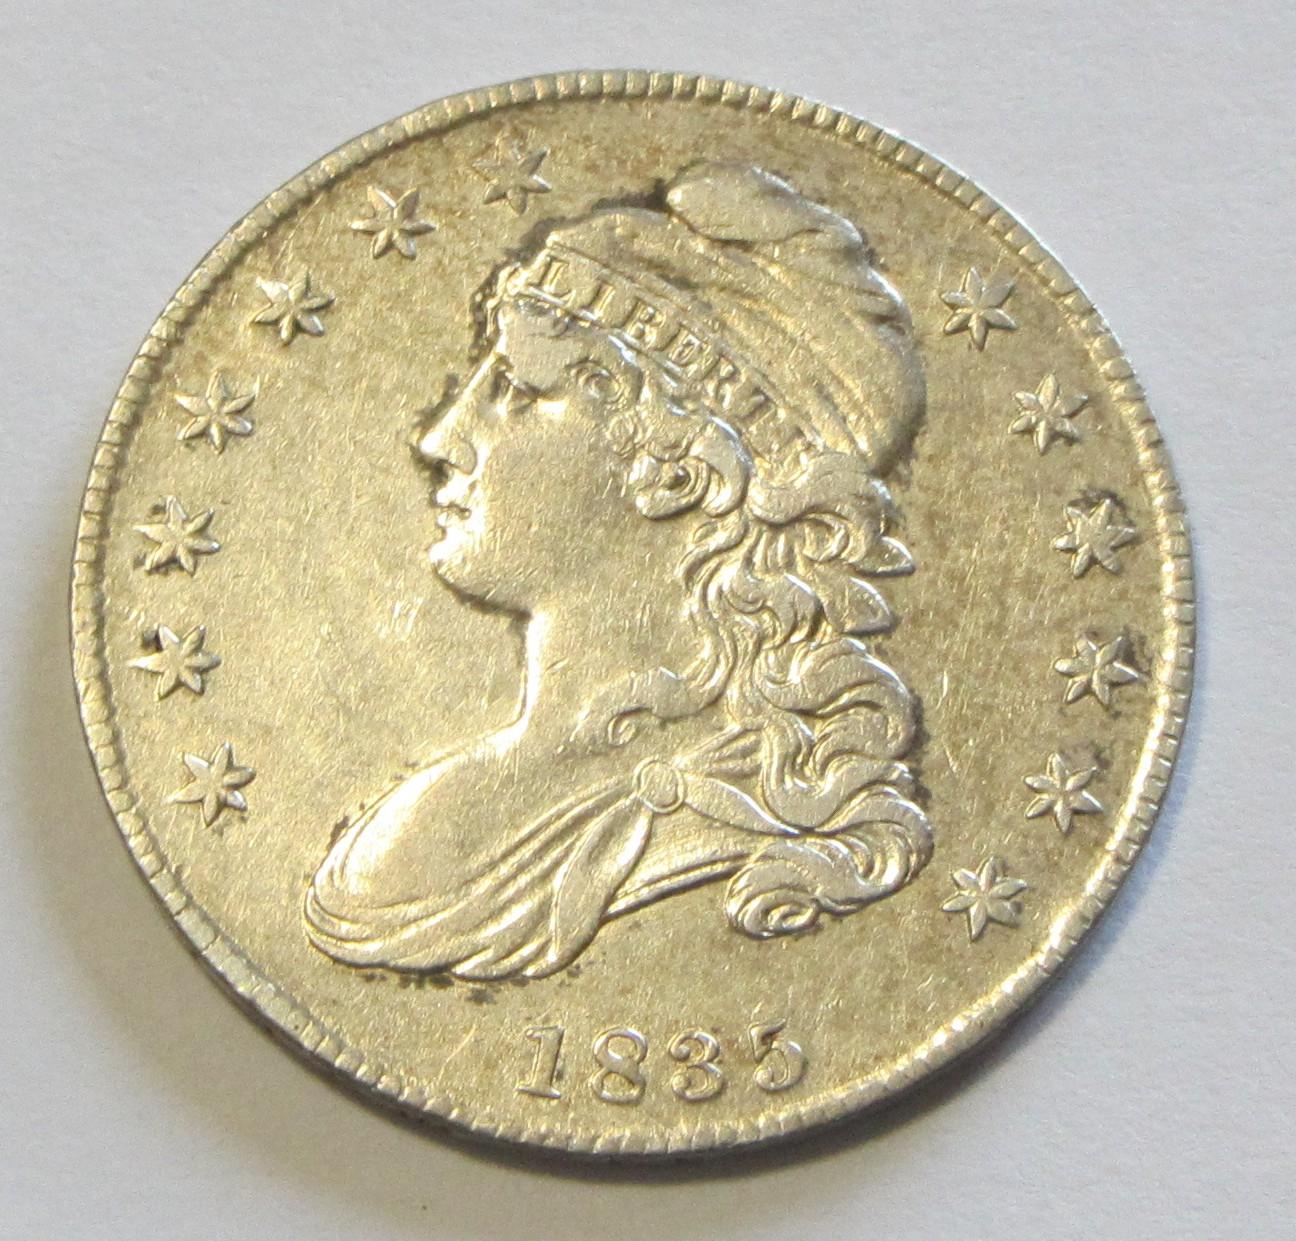 1835 CAPPED BUST HALF DOLLAR